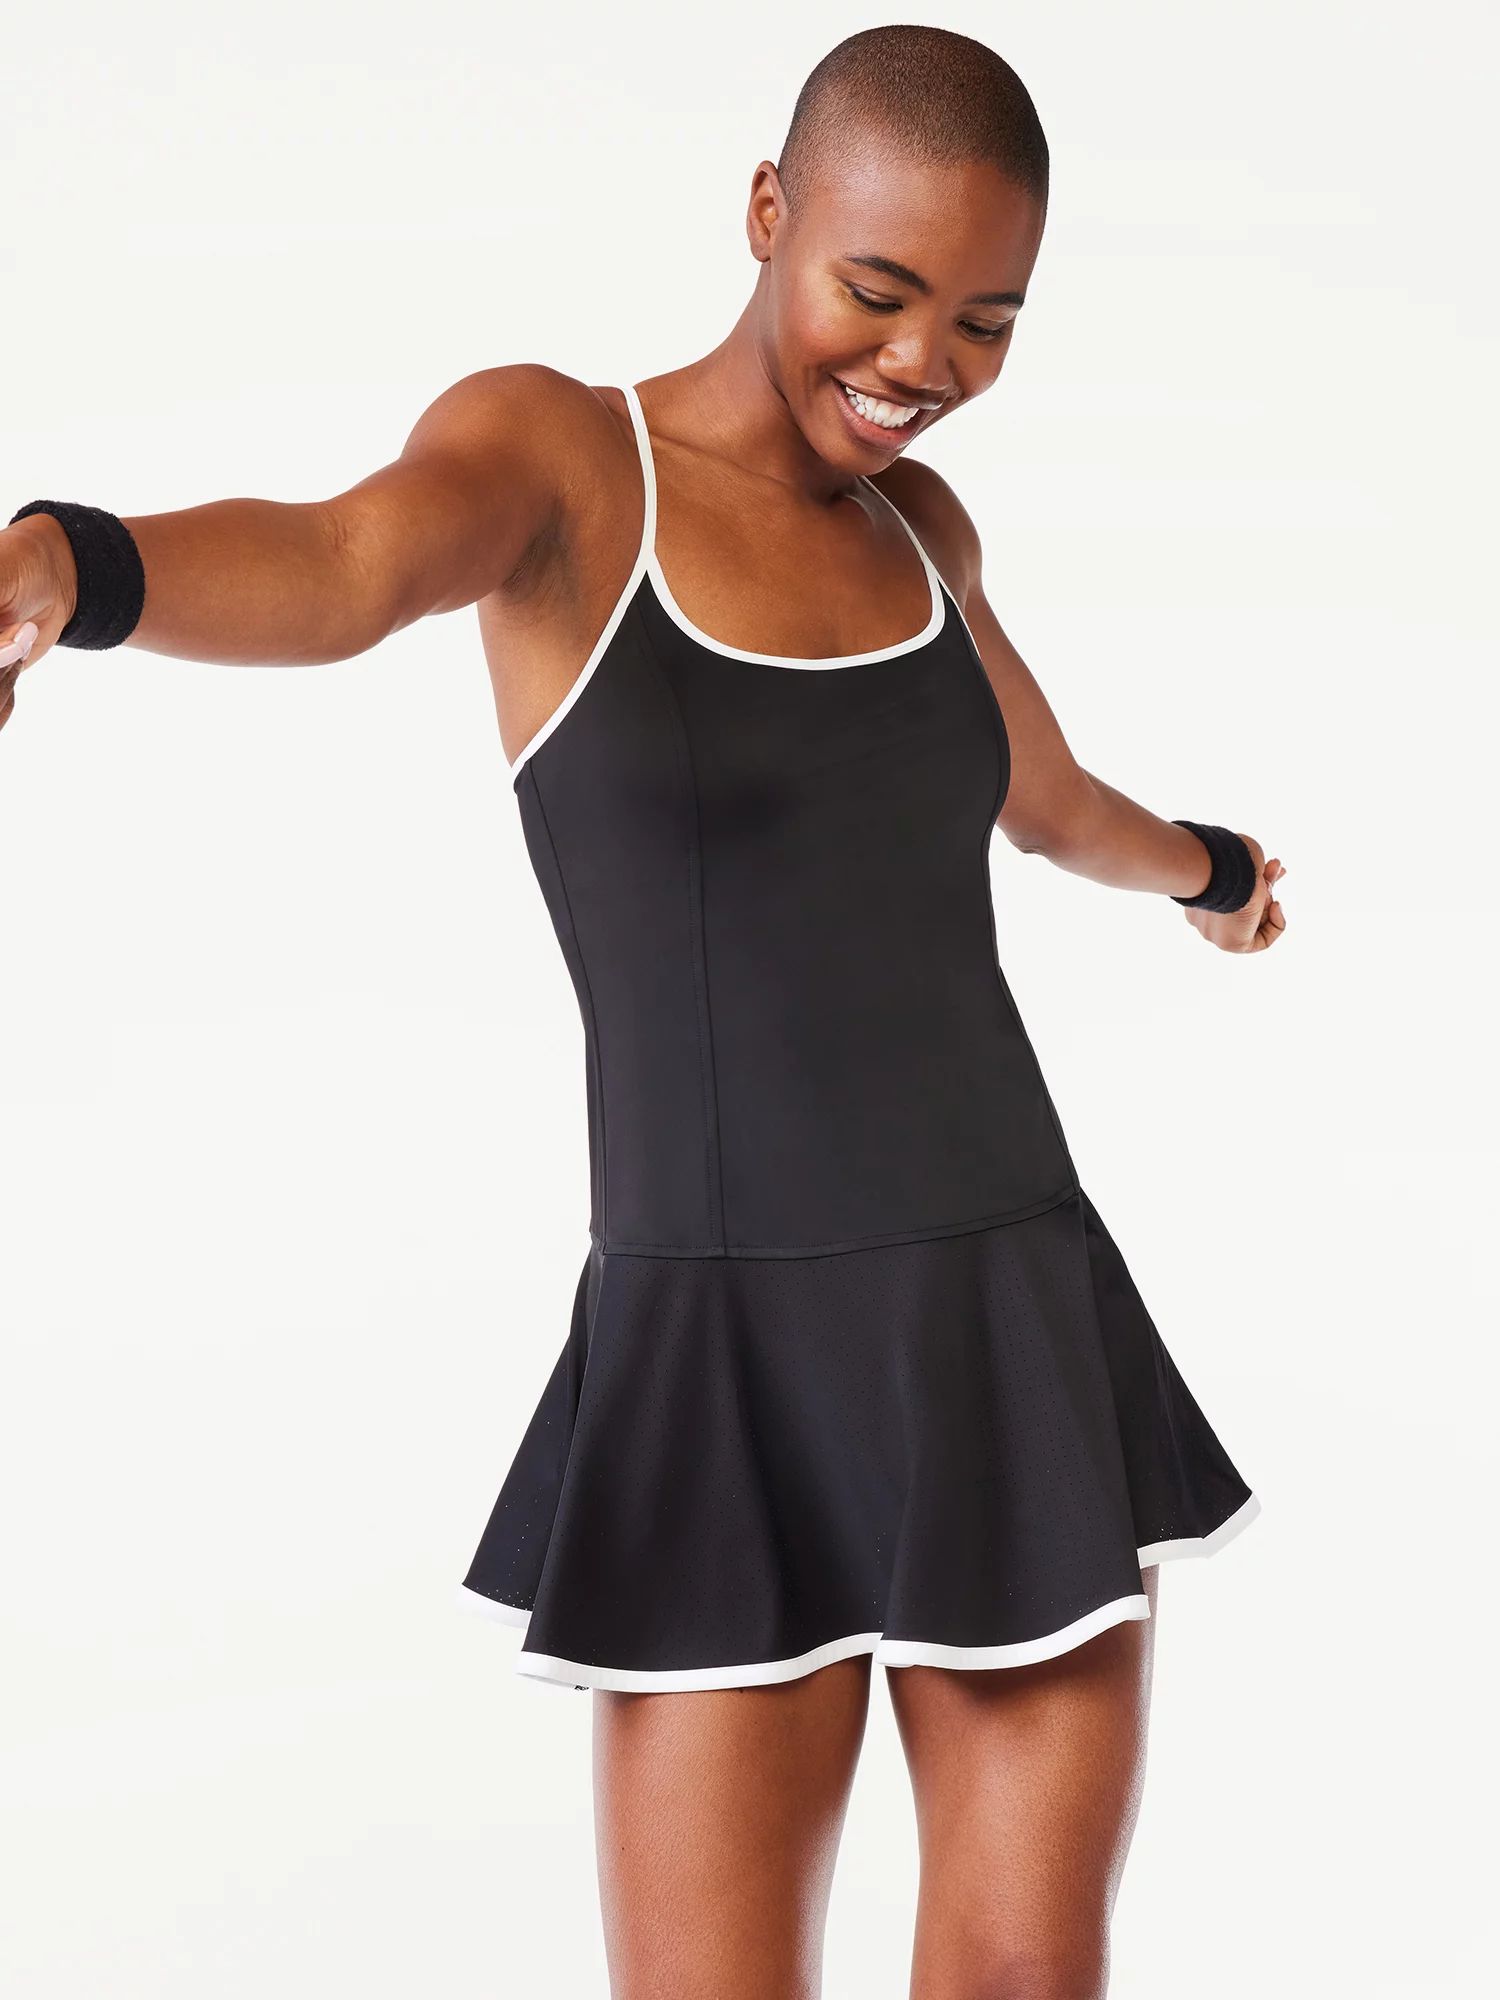 Love & SportsLove & Sports Women’s Game on Tennis Dress, Sizes XS-XXXLUSD$45.00Price when purch... | Walmart (US)